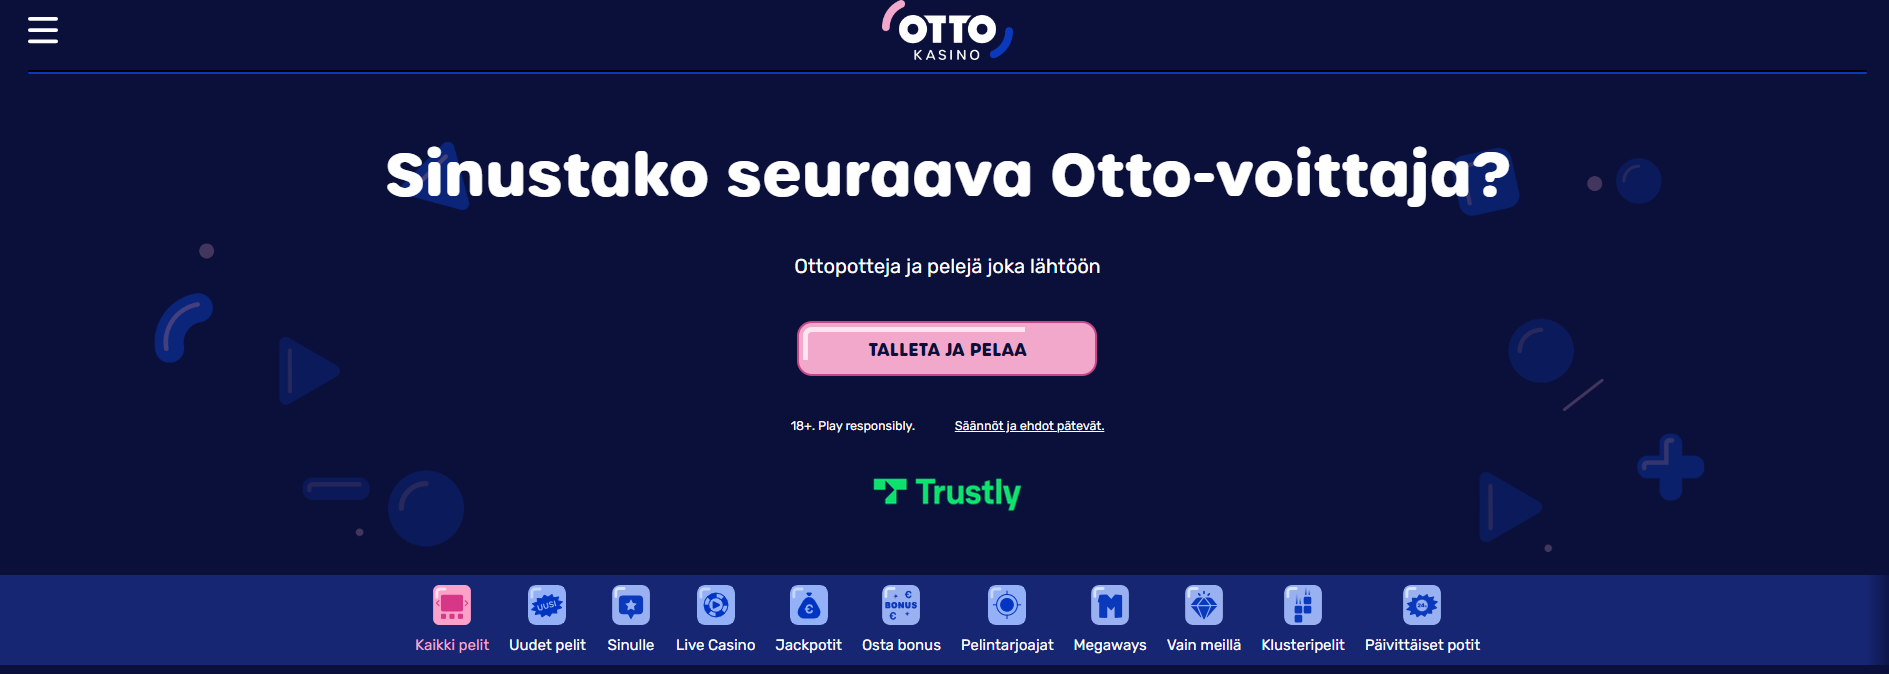 ottokasino.com